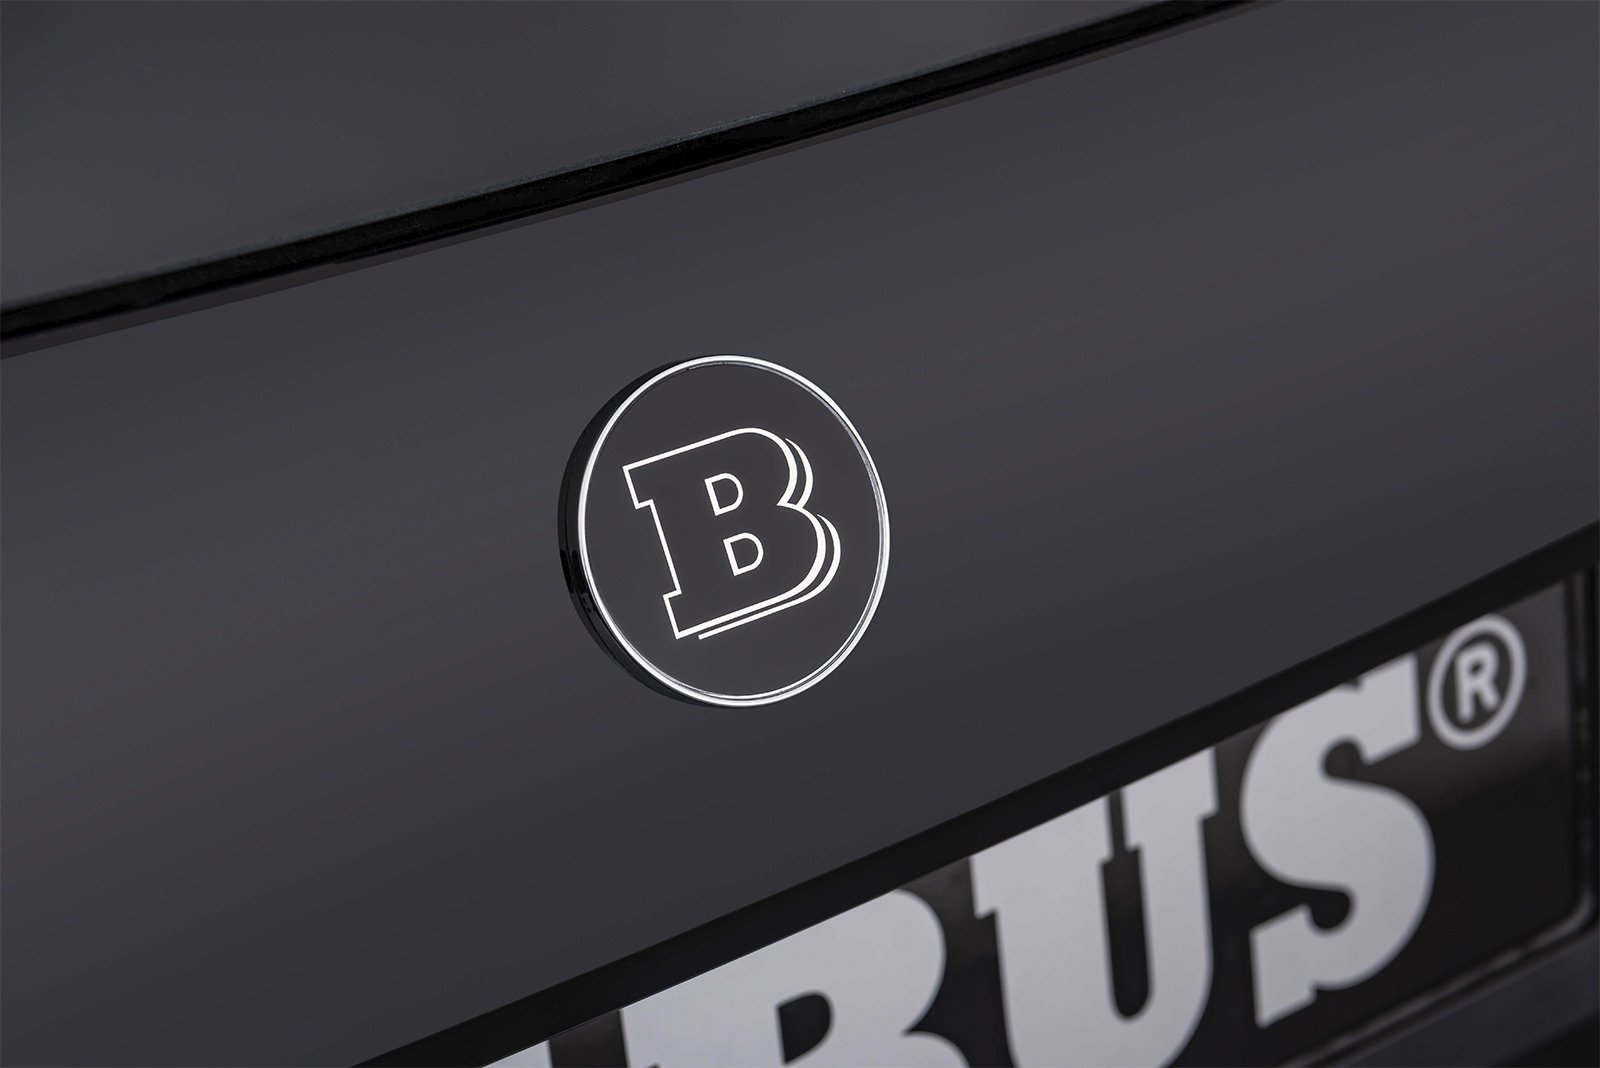 Brabus Emblem Logo for boot/ trunk lid